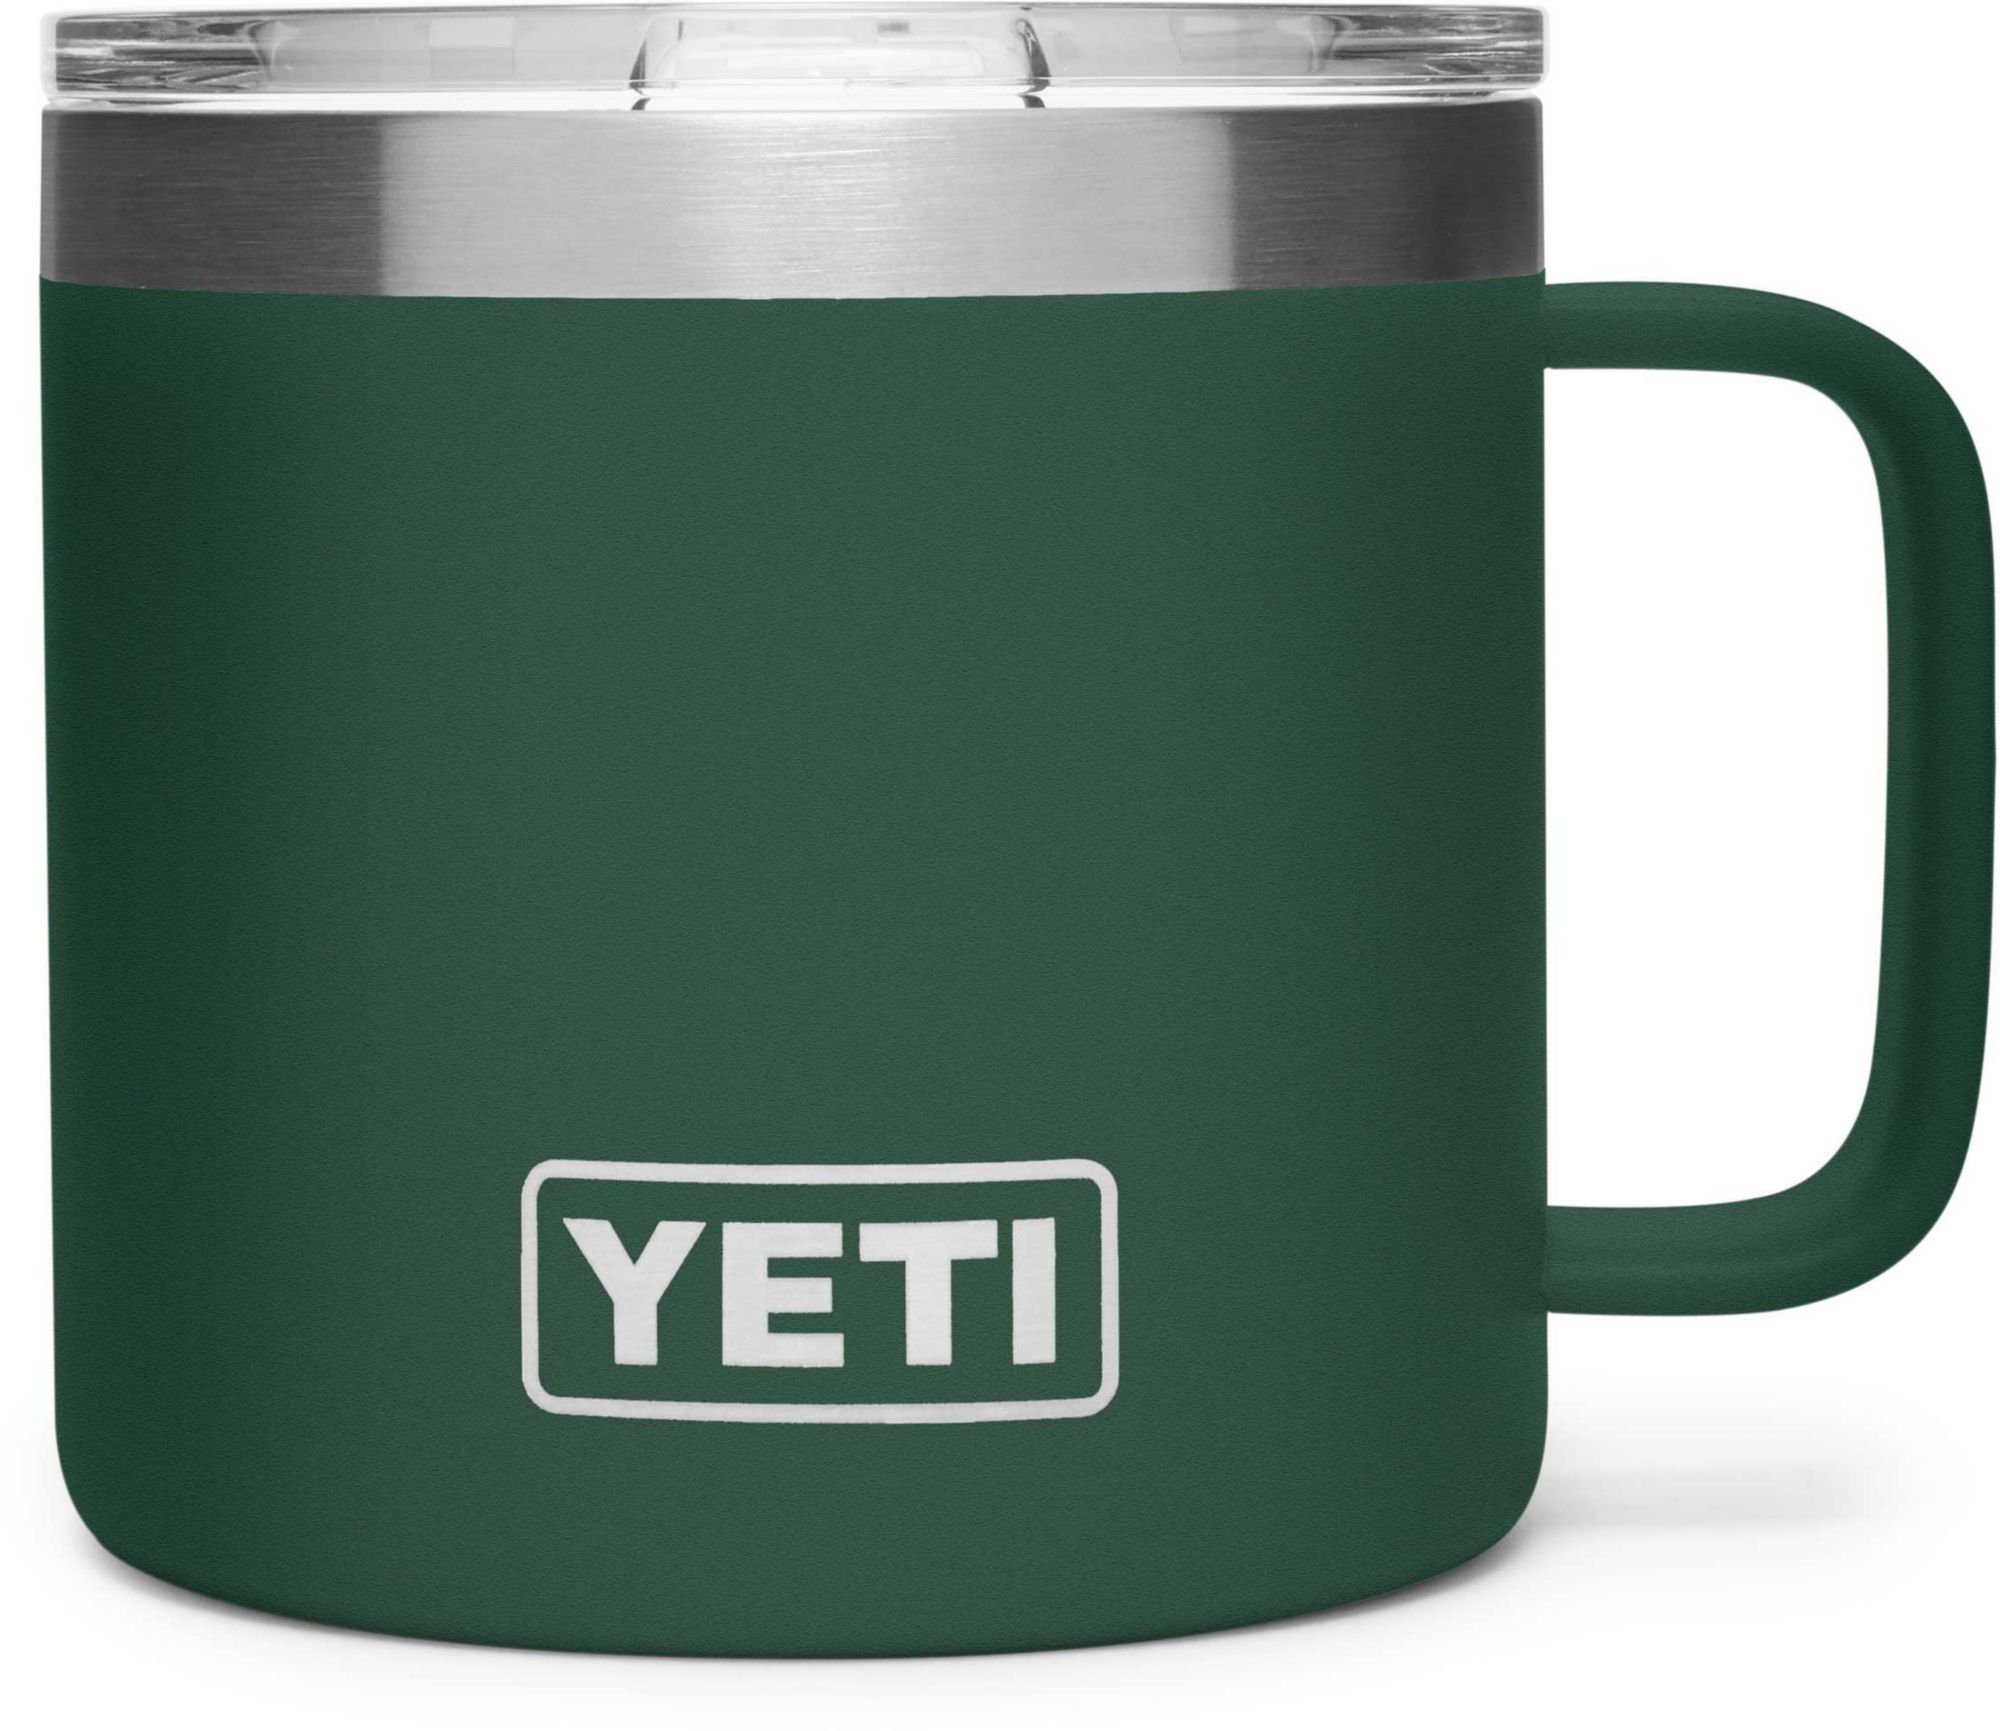 yeti coffee mug